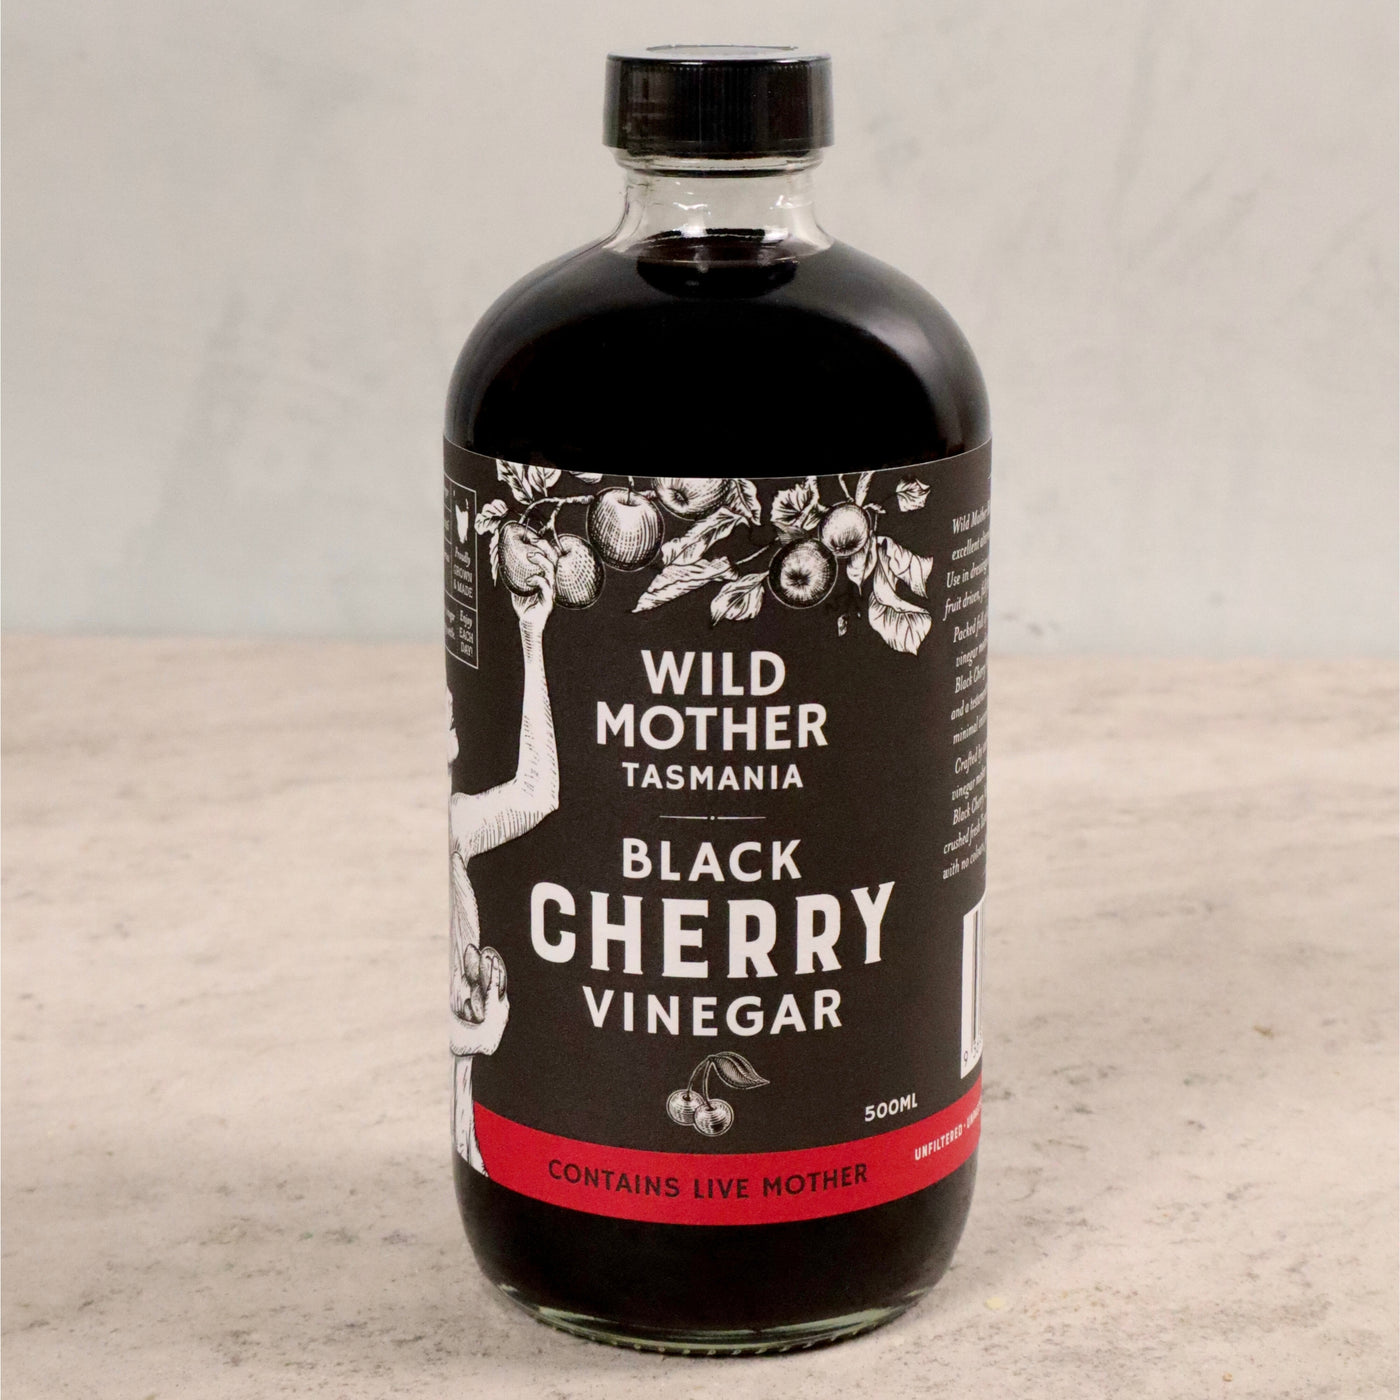 Wild Mother Tasmania - Black Cherry Vinegar